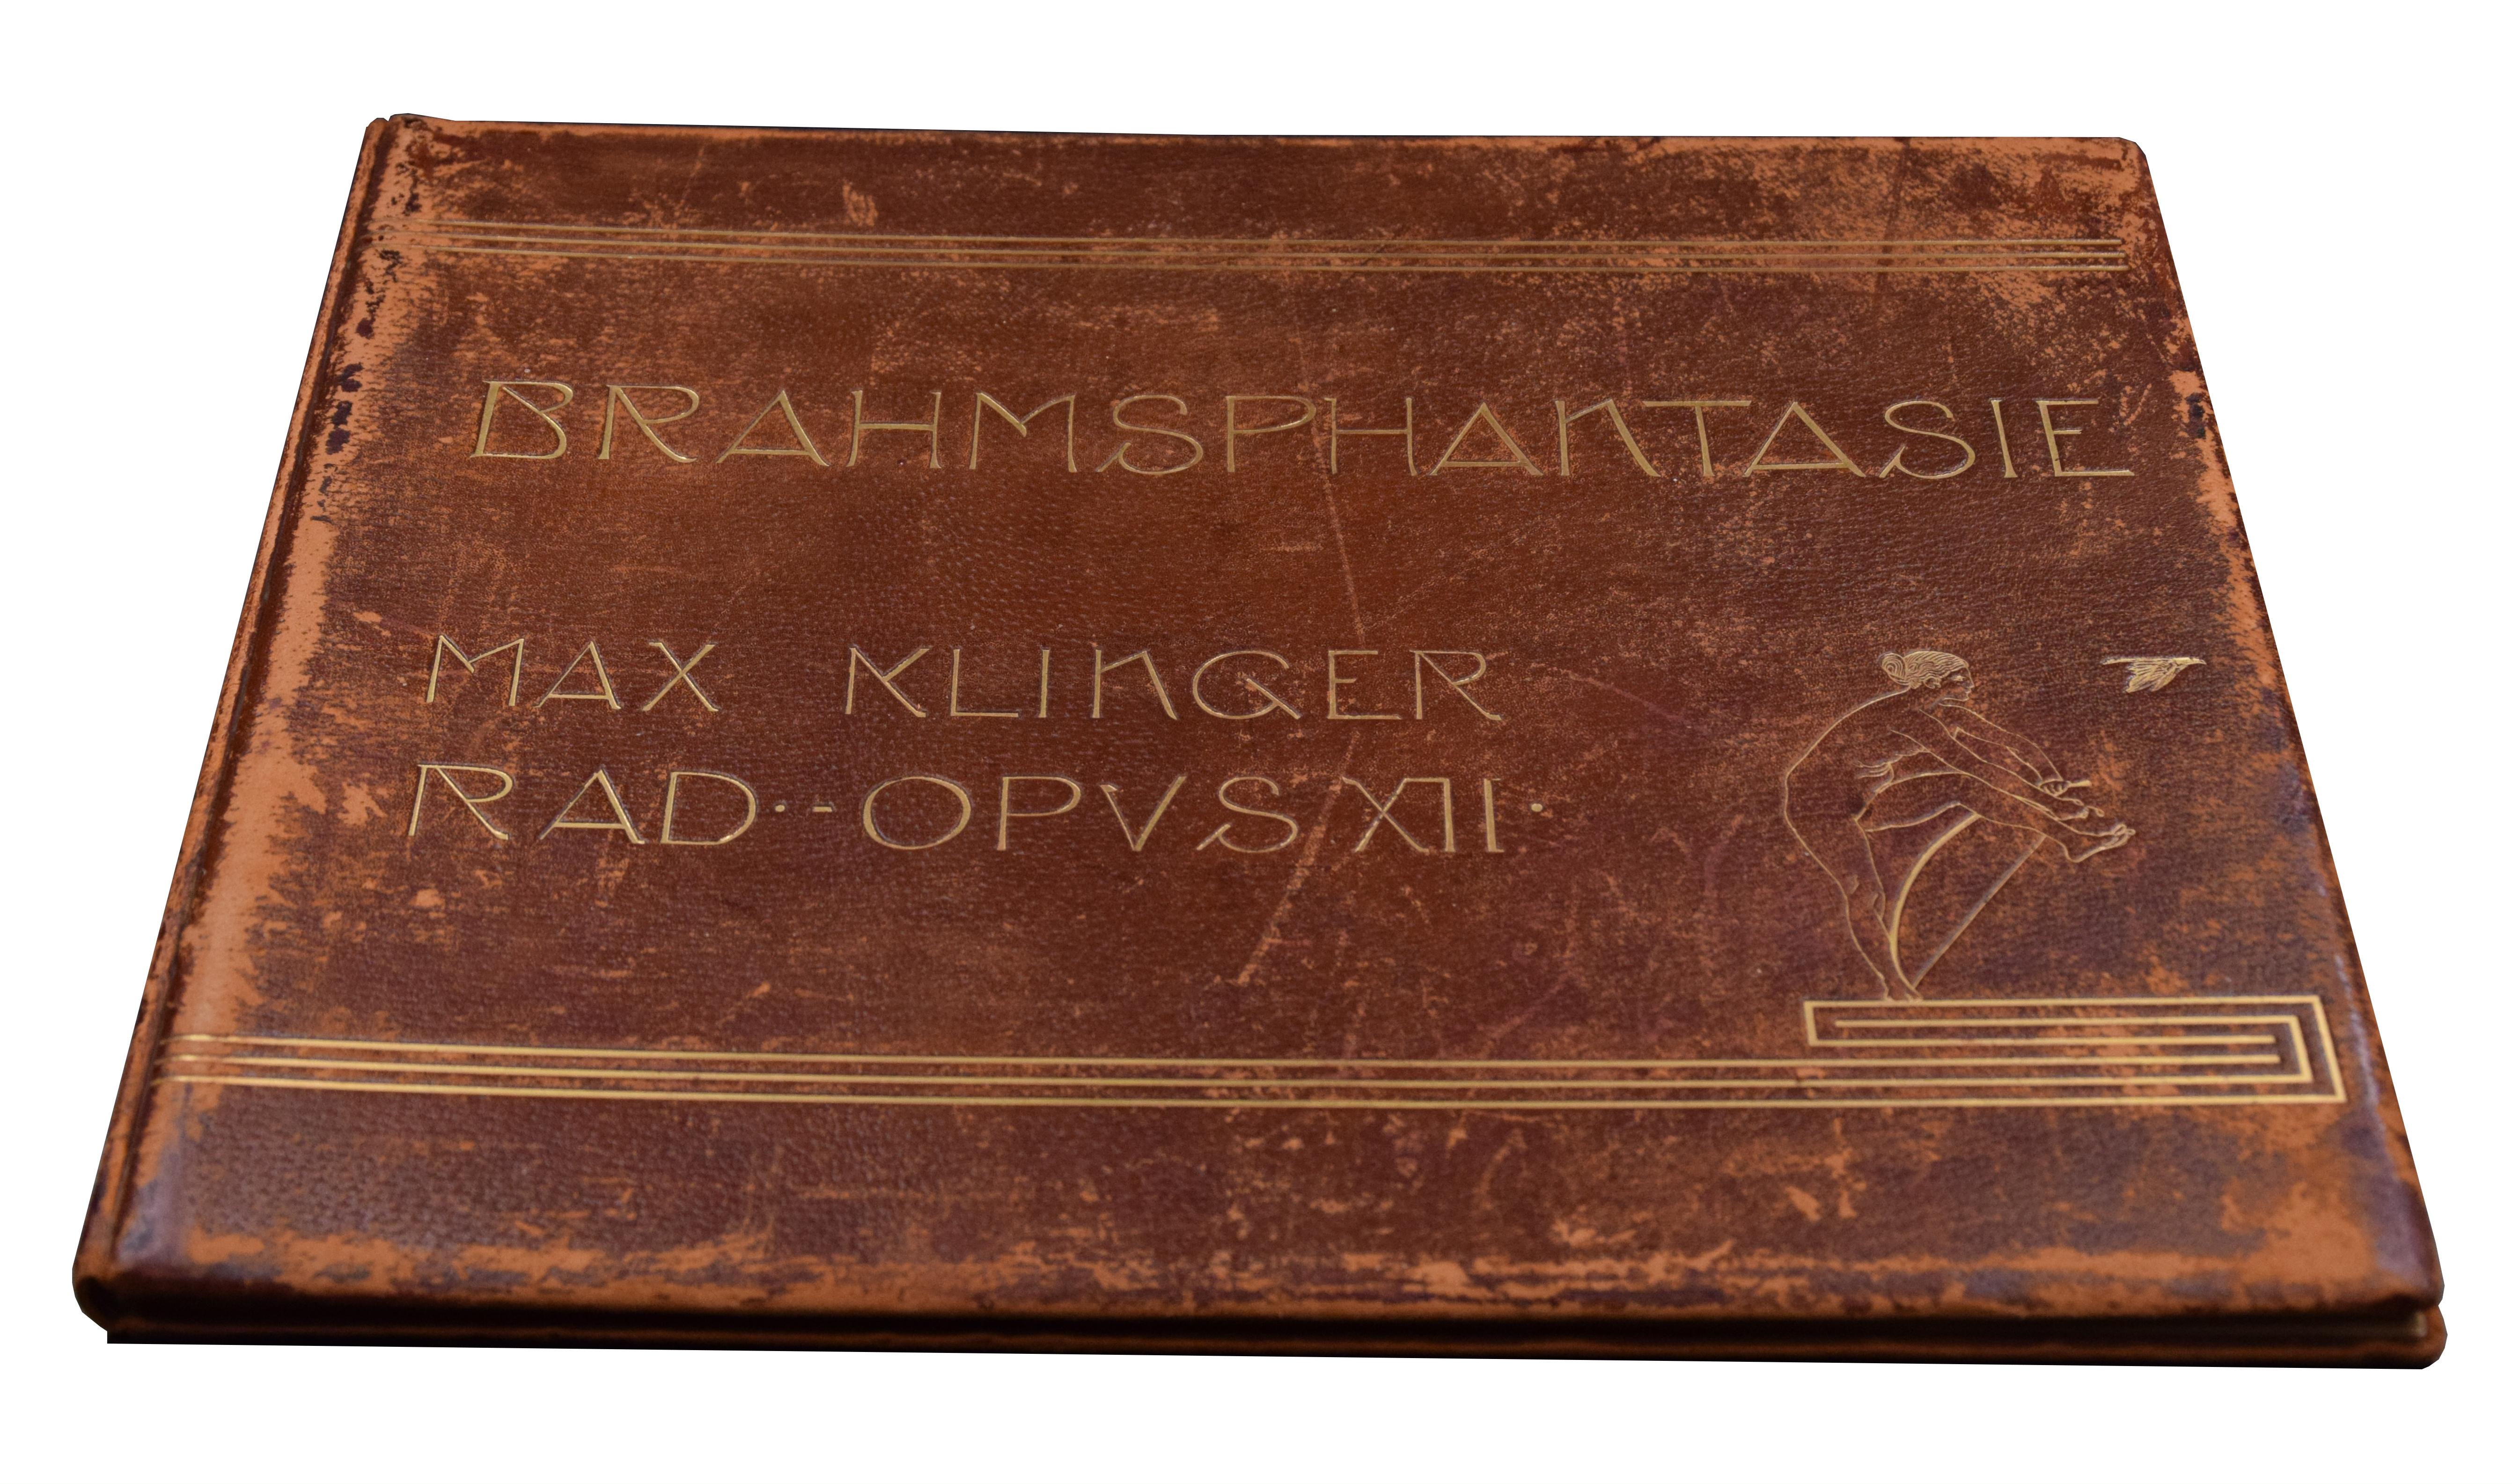 Brahms-Phantasie - Rare Portfolio of 41 Engravings by Max Klinger - 1894 For Sale 12